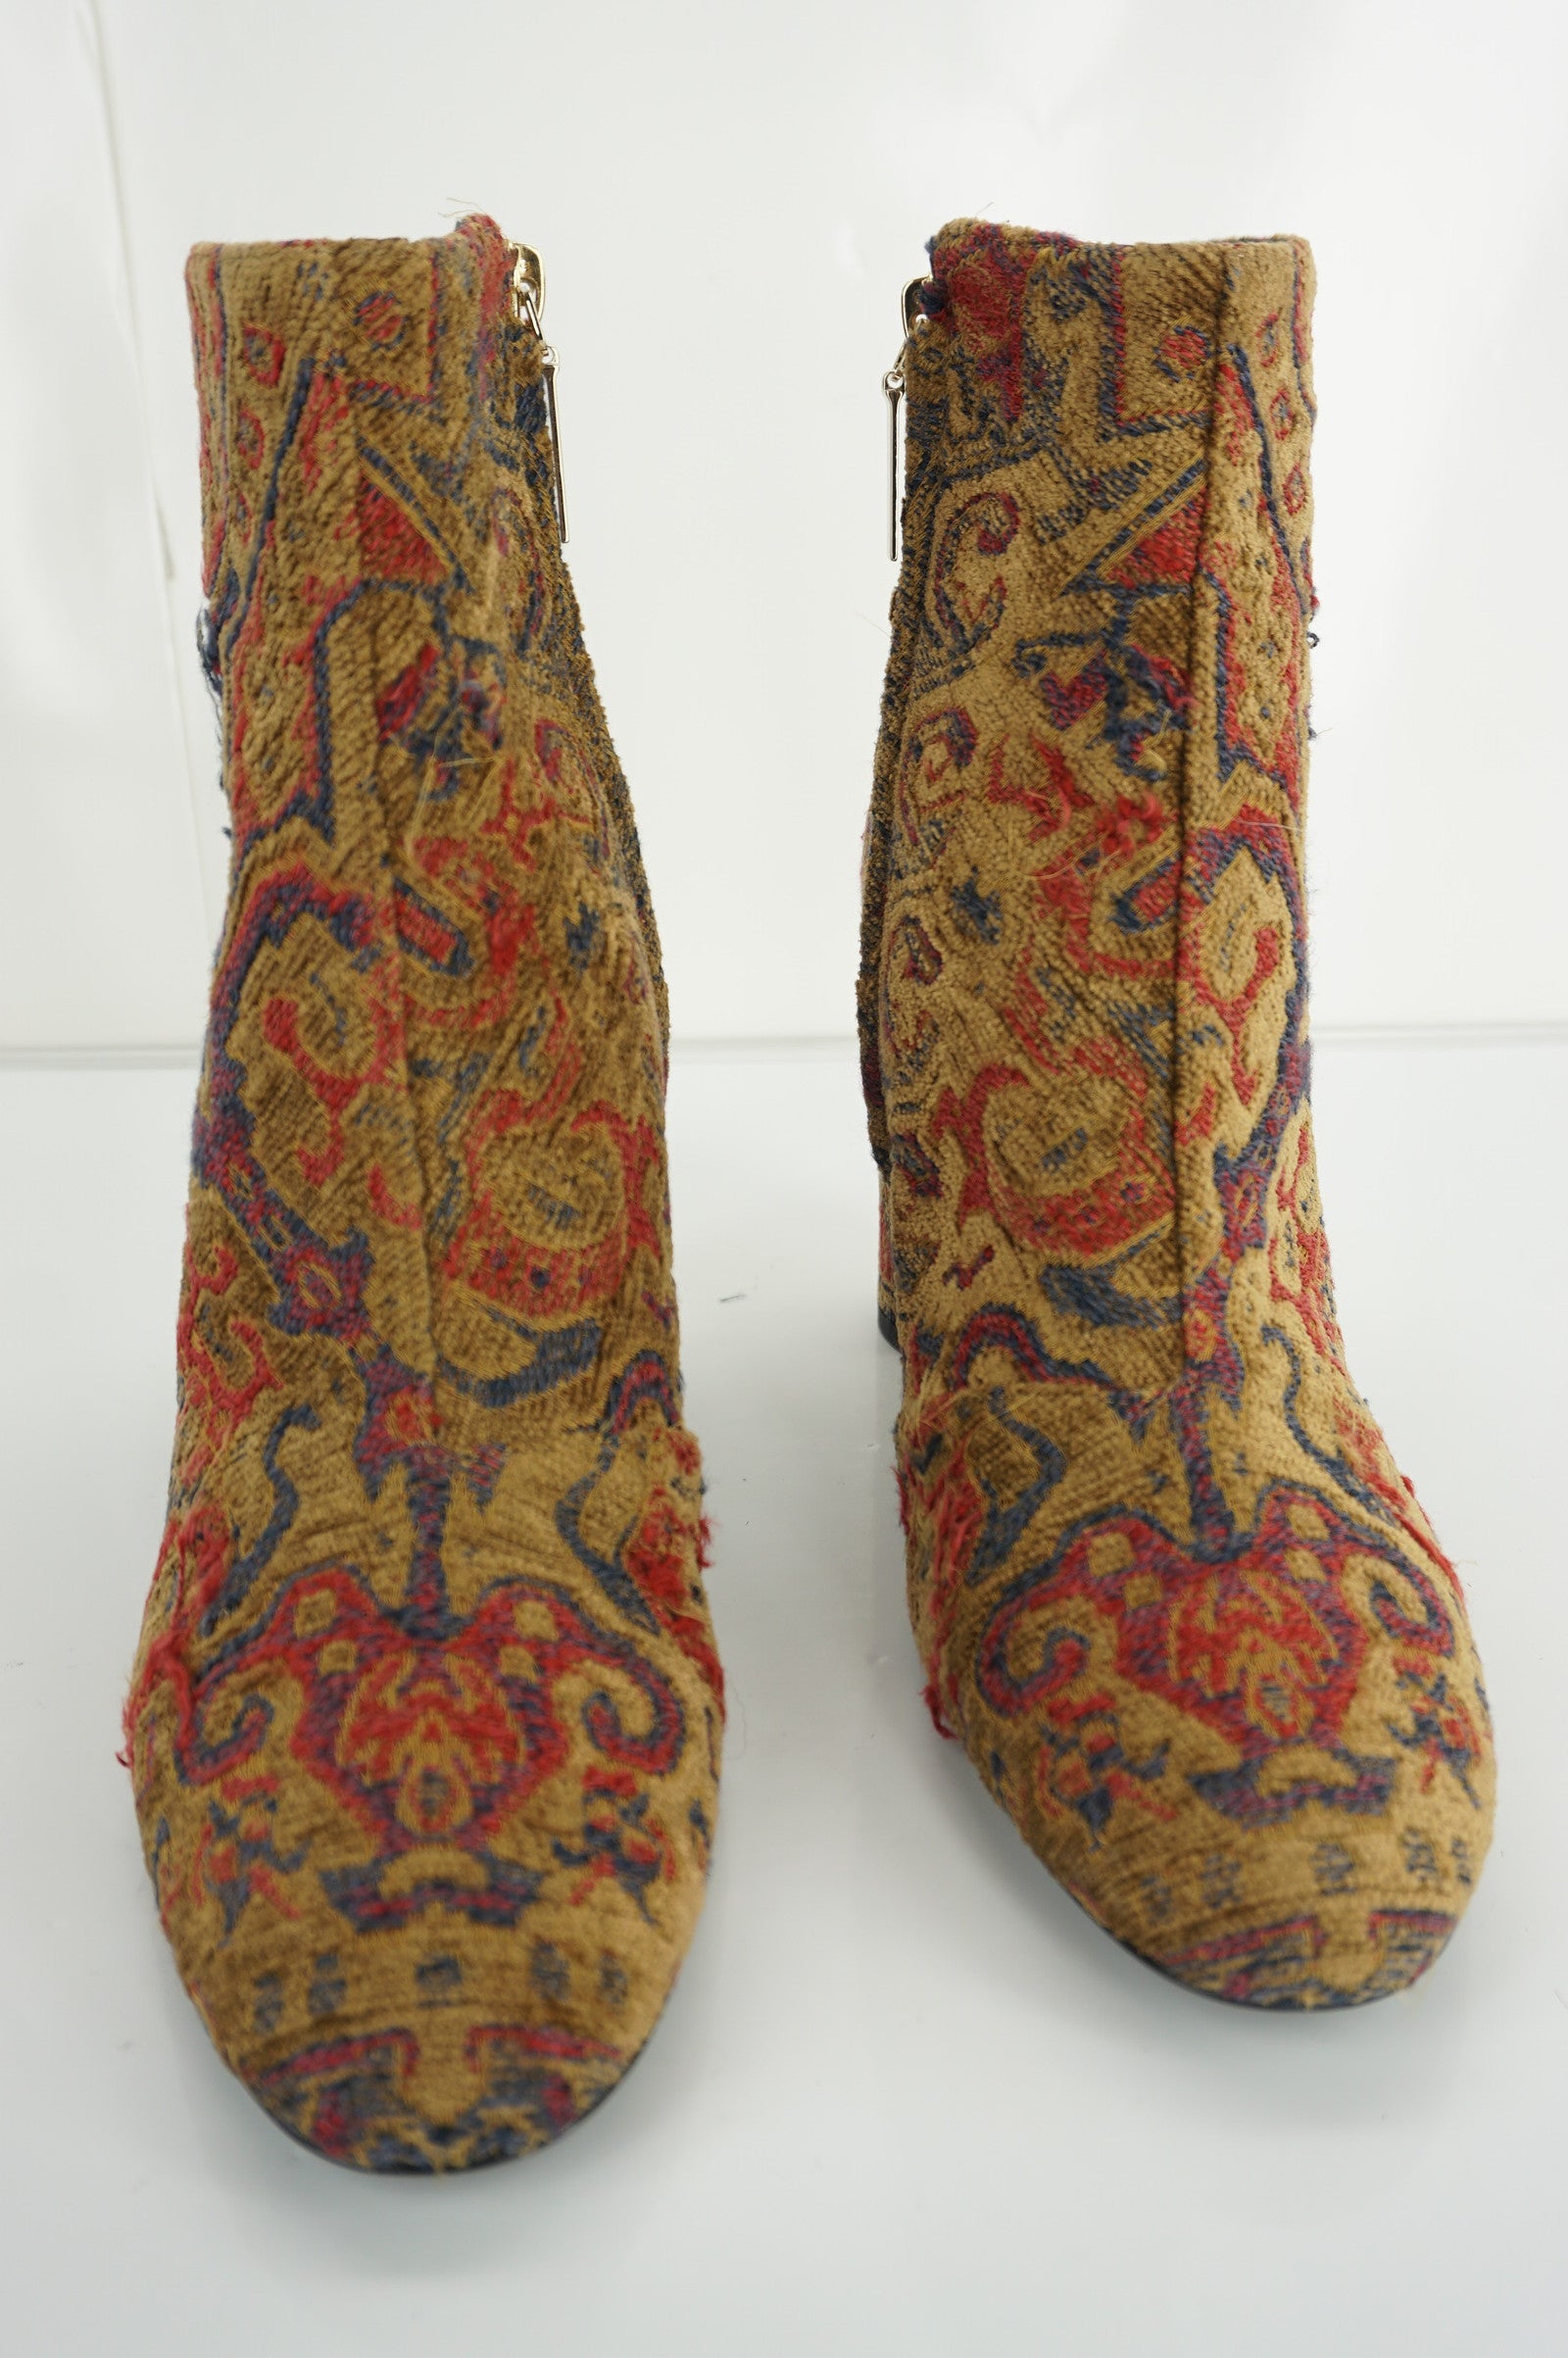 Yves SAINT LAURENT Loulou Tapestry block Heel Ankle Boots SZ 39.5 NIB YSL $995